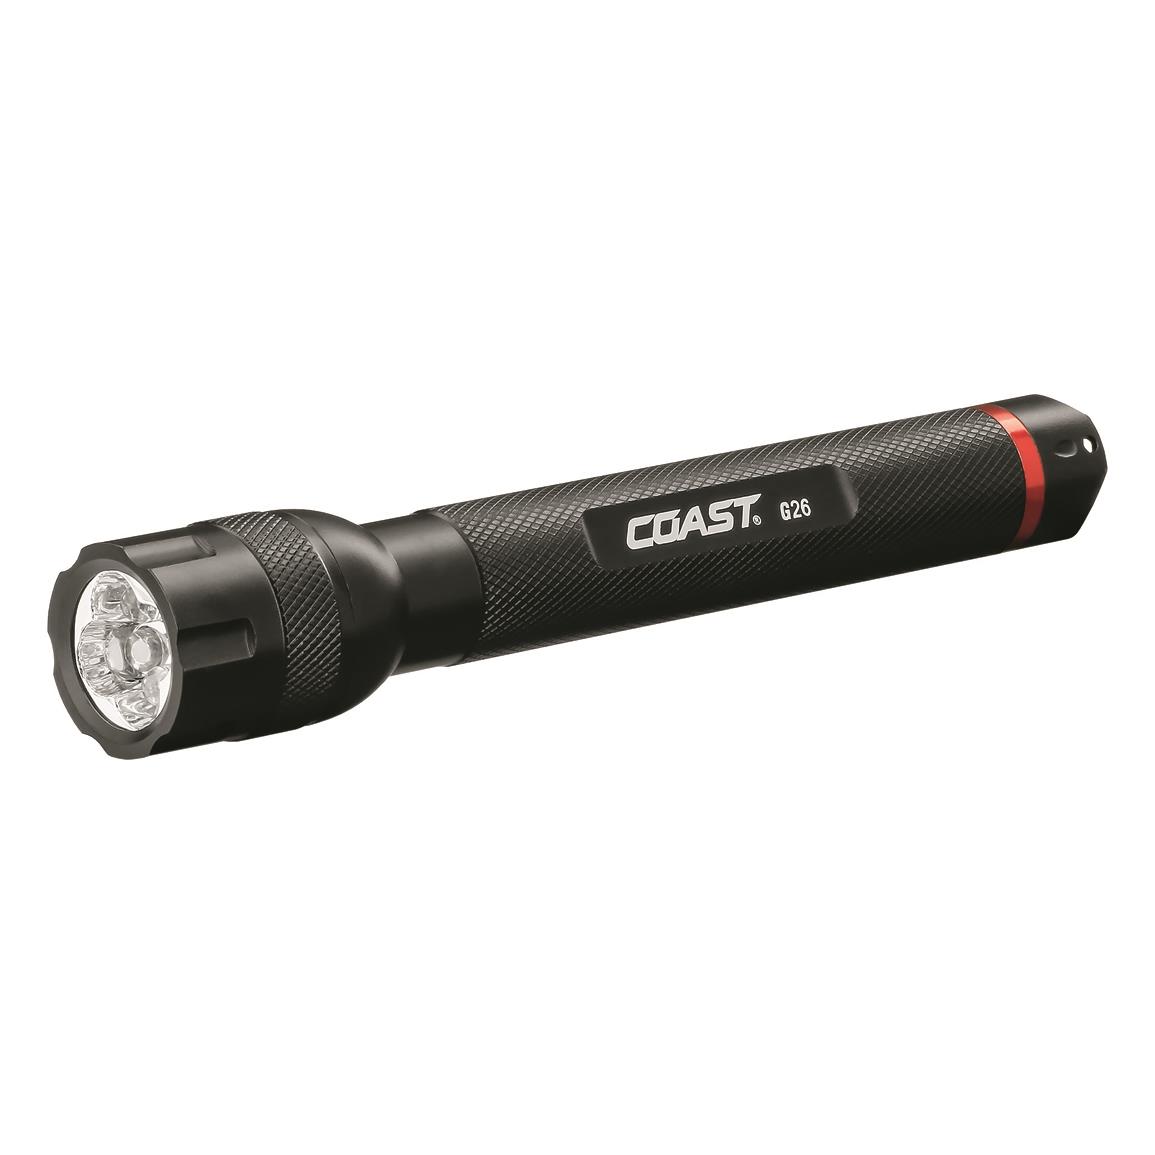 COAST G26 Utility Fixed Beam Flashlight, 330 Lumens